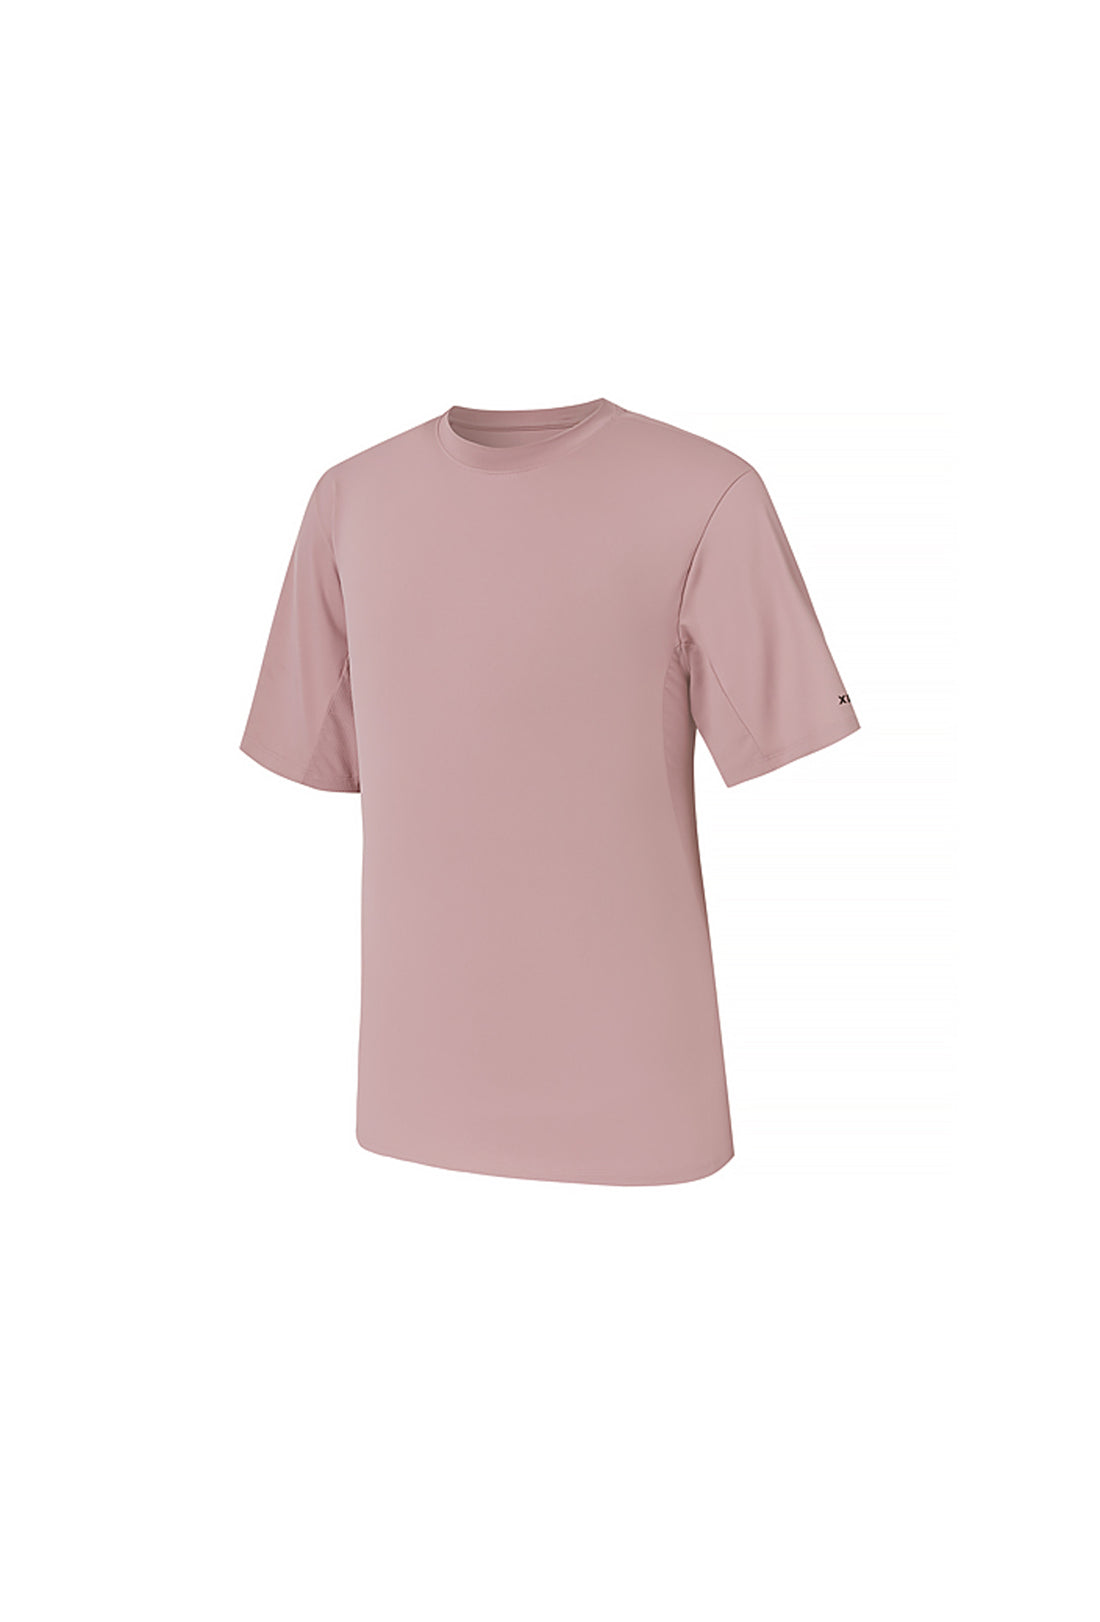 Cool Mesh Basic Short Sleeve - Curve Pink